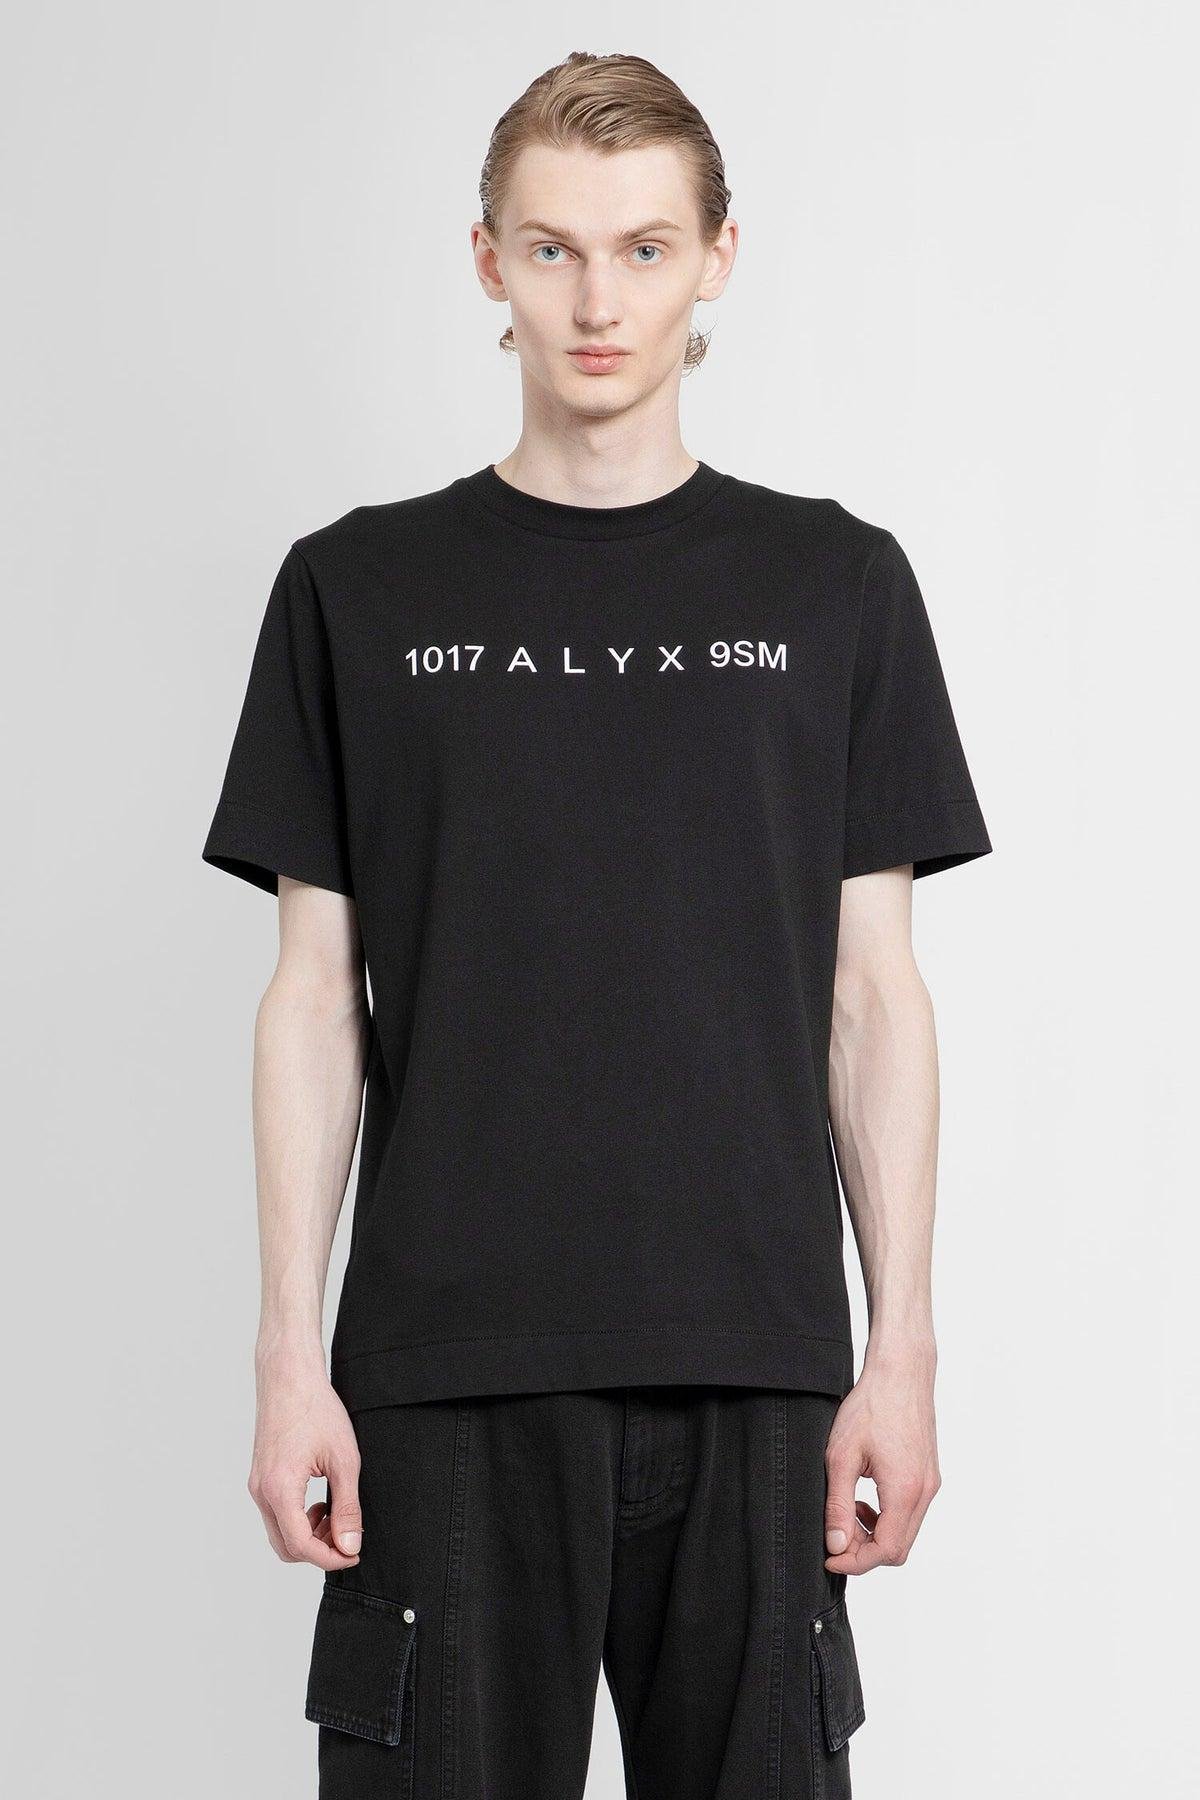 1017 Alyx 9Sm Man Black T Shirts by 1017 ALYX 9SM